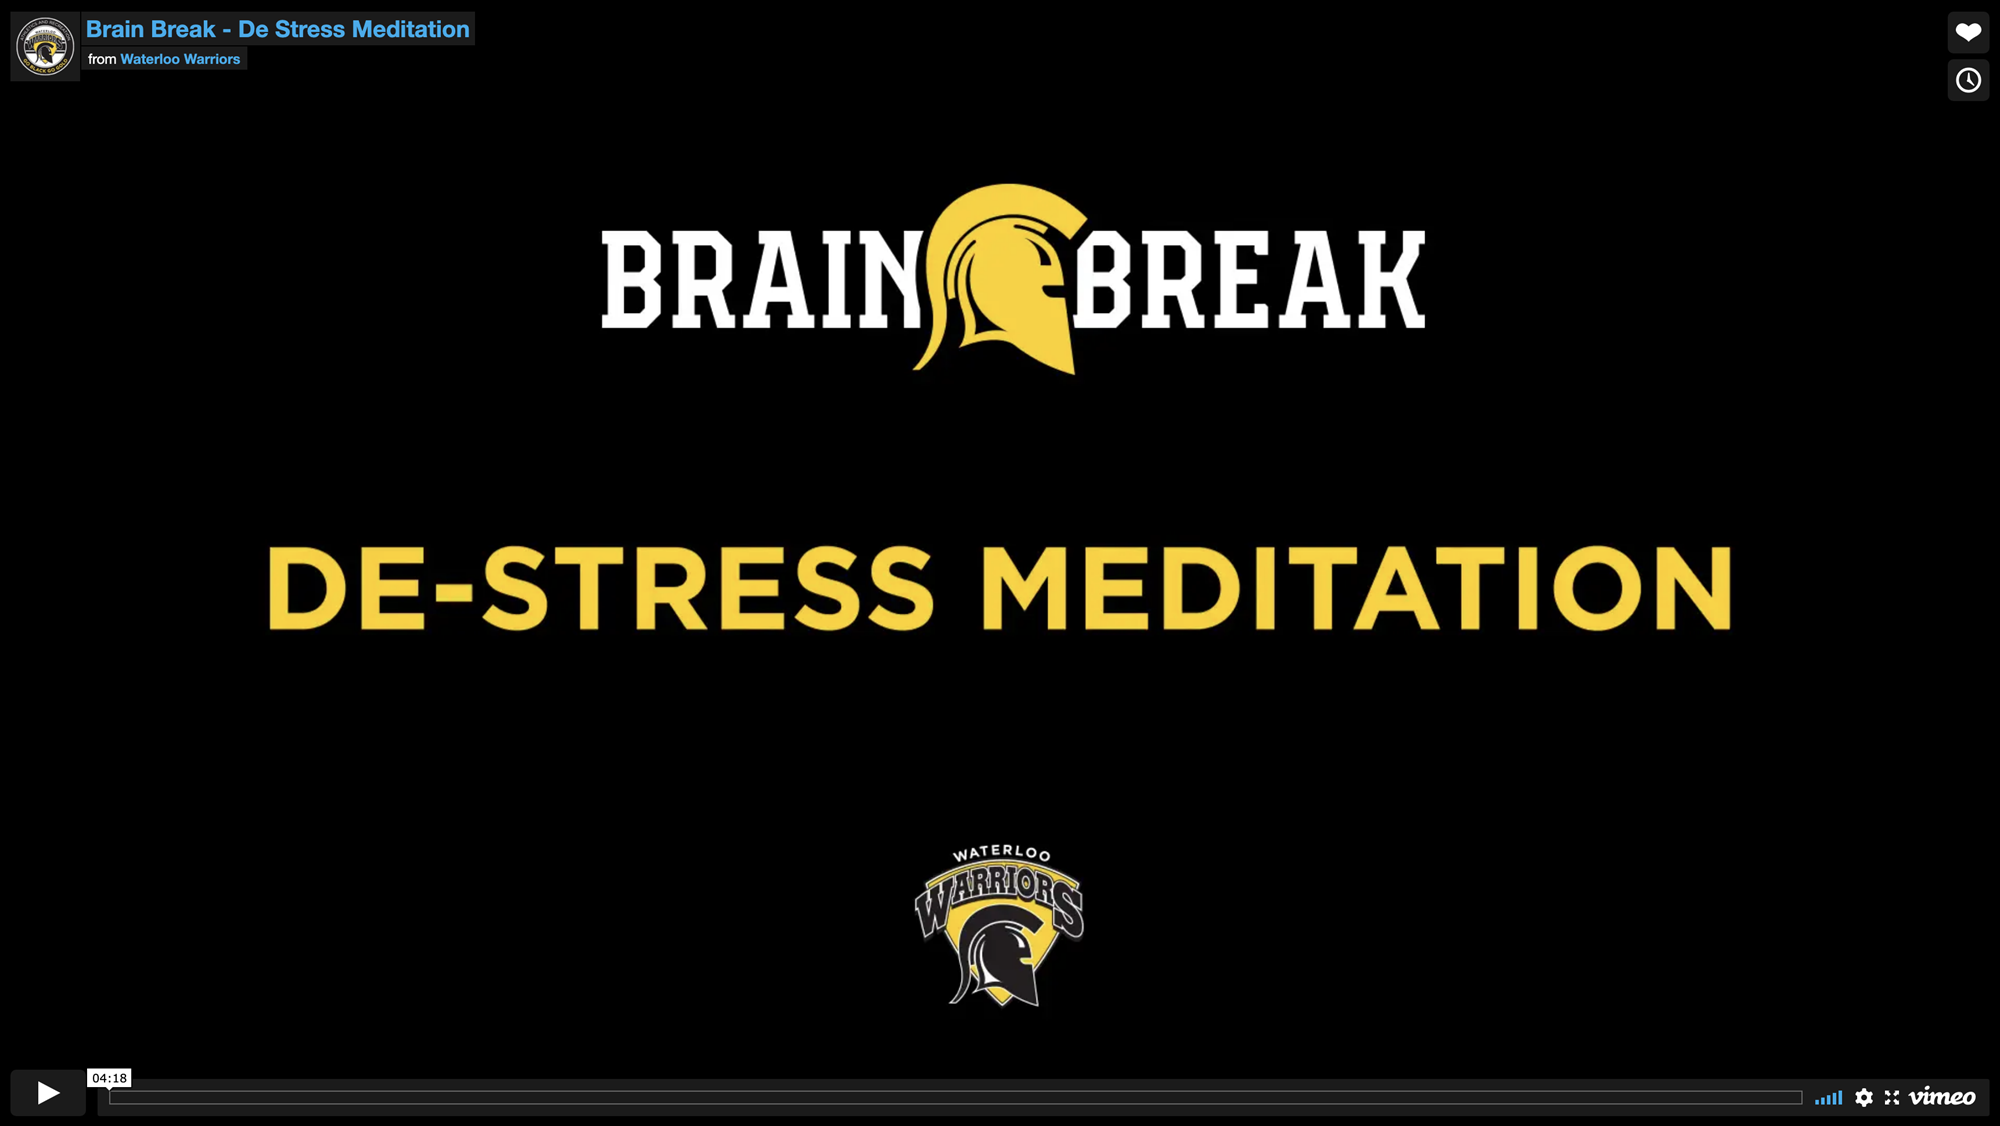 De-Stress Meditation